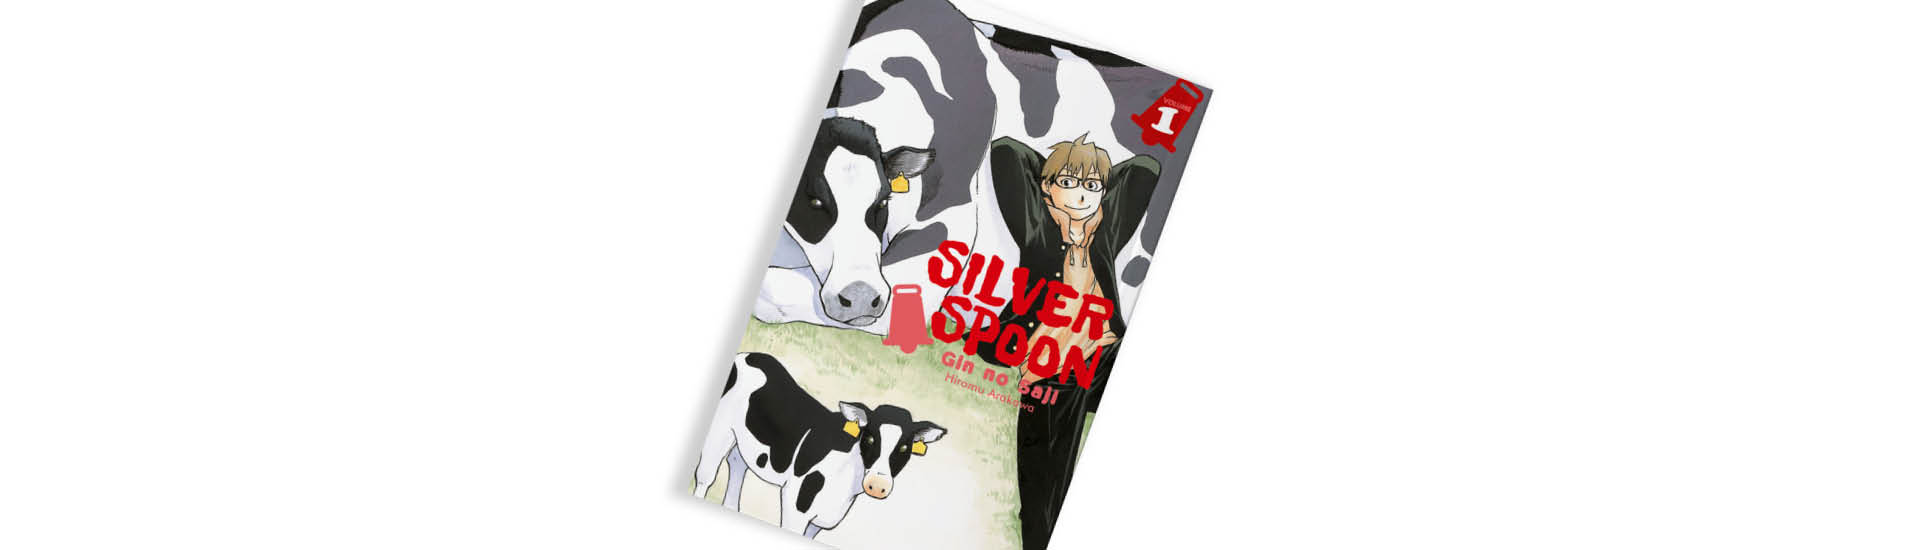 Capa do mangá 'Silver Spoon', de Hiromu Arakawa, em fundo branco.